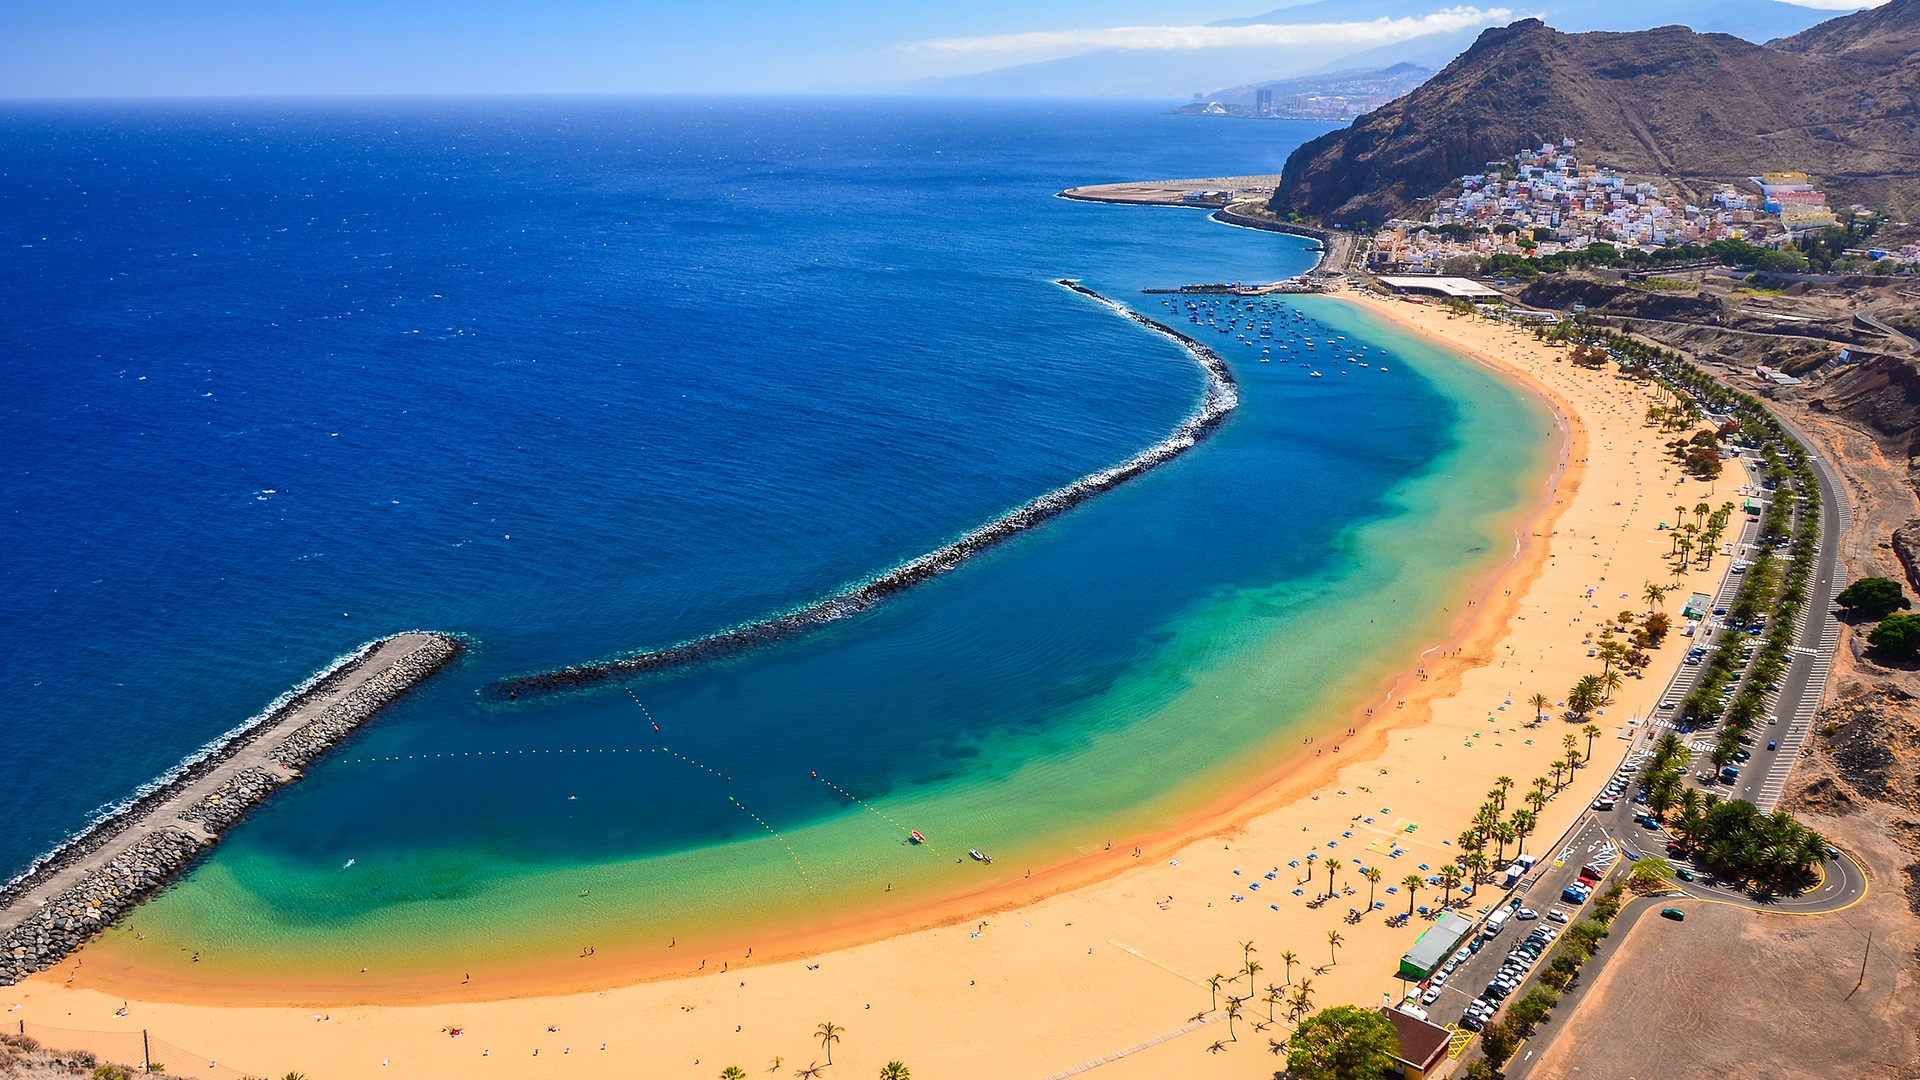 Hotel Landmar Playa La Arena Tenerife Canary Islands Holidays